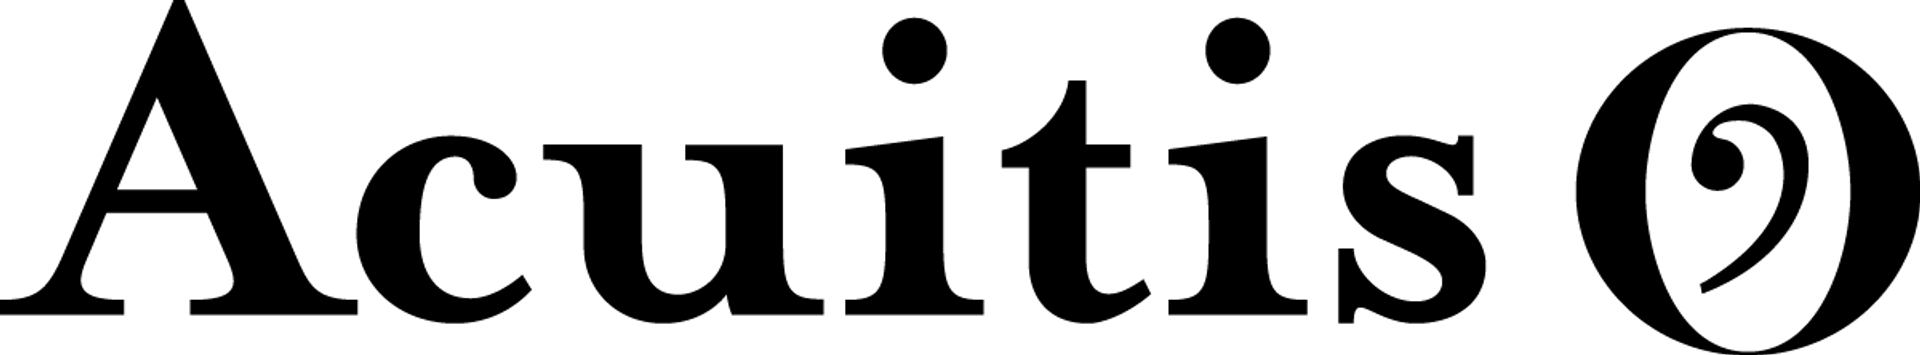 ACUITIS logo du catalogue